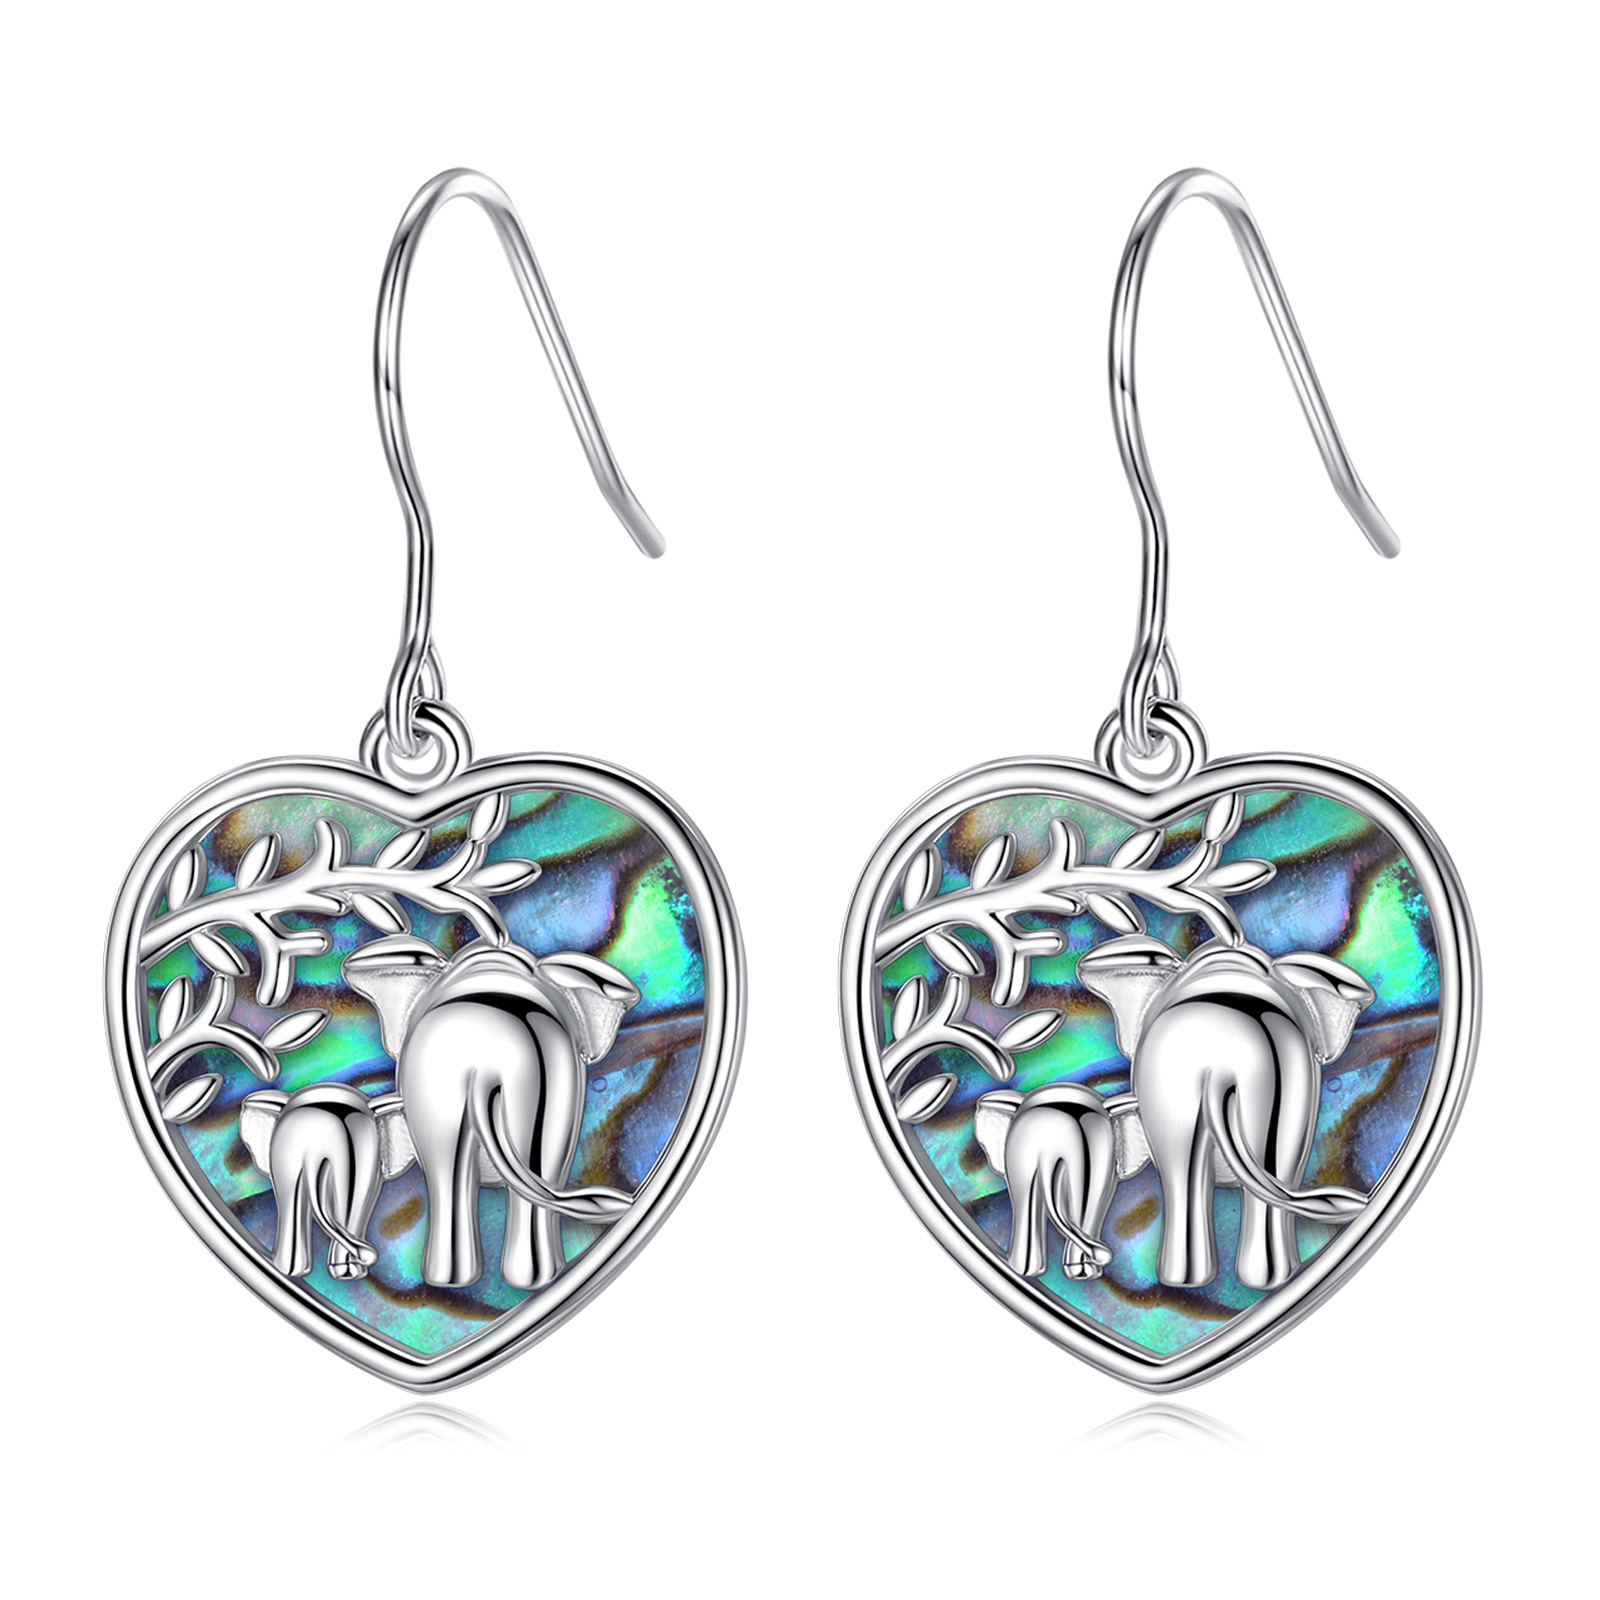 Merryshine Jewelry Heart Shaped Abalone Shell 925 Earring Elephant Mom and Baby Earrings